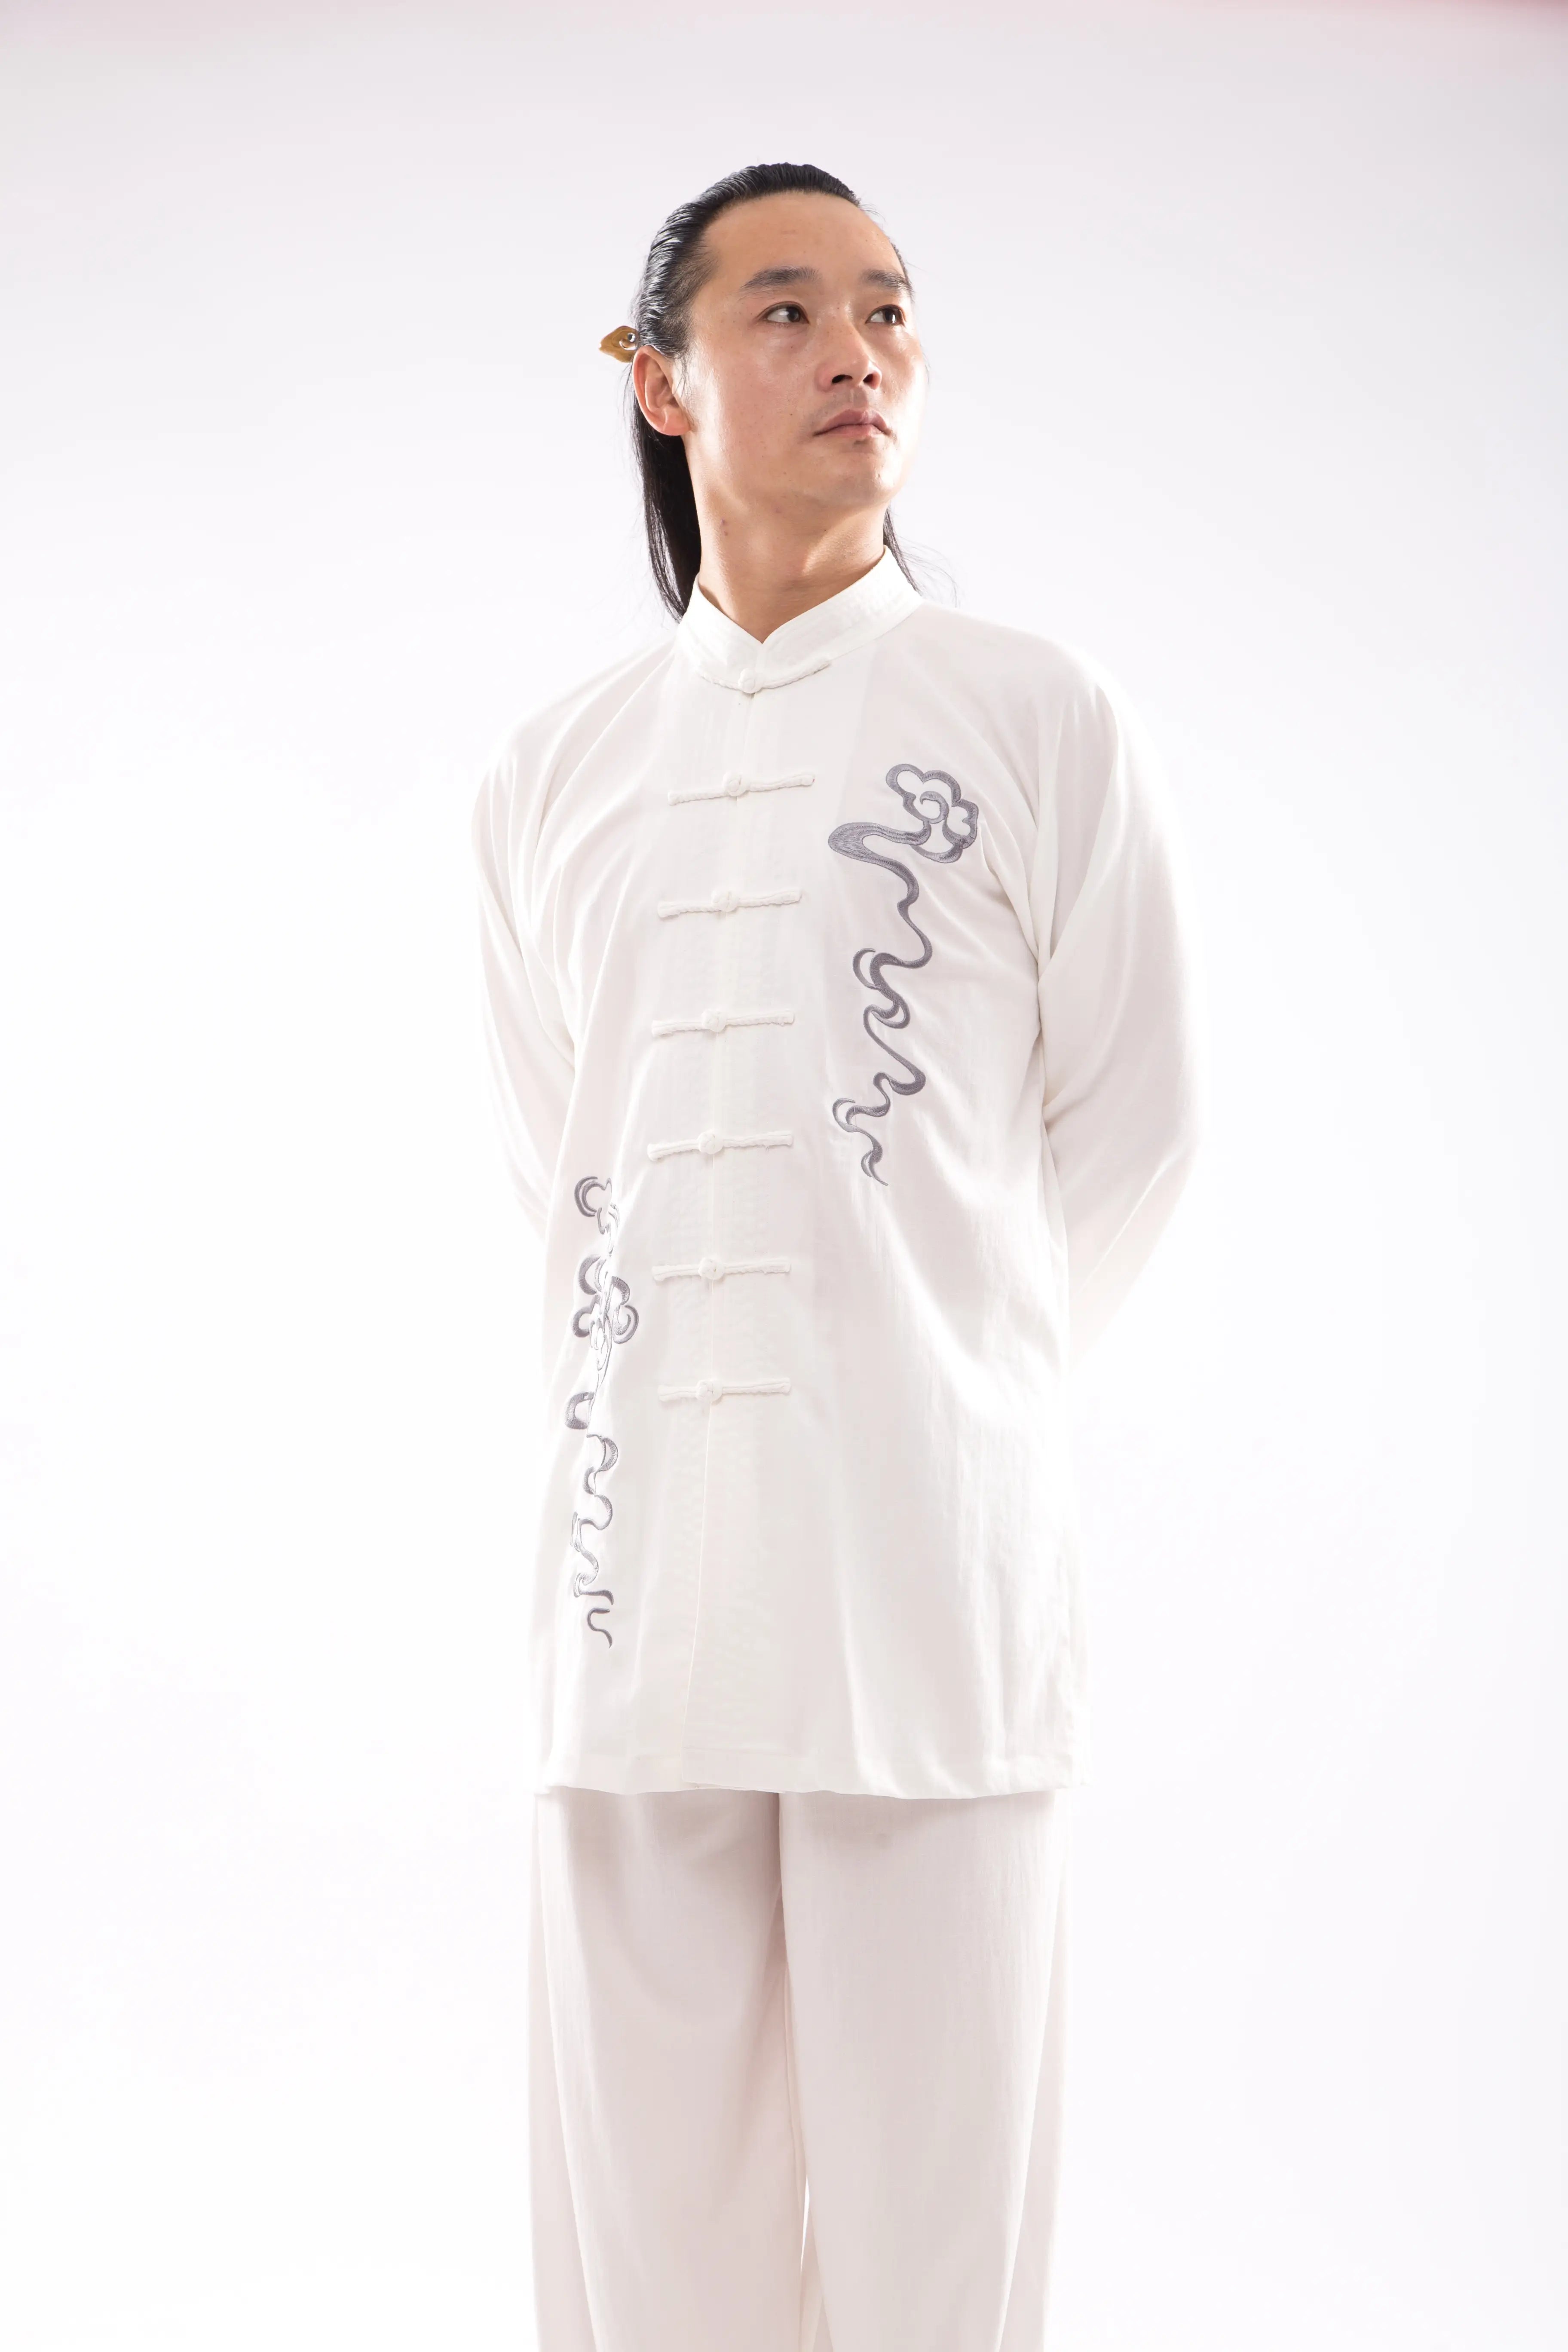 Classical White Auspicious Cloud Embroidered Wudang Tai Chi Wellness Ensemble: Unisex, Silk-Linen Blend - Timelessly Elegant Traditional Hanfu Martial Arts Uniform